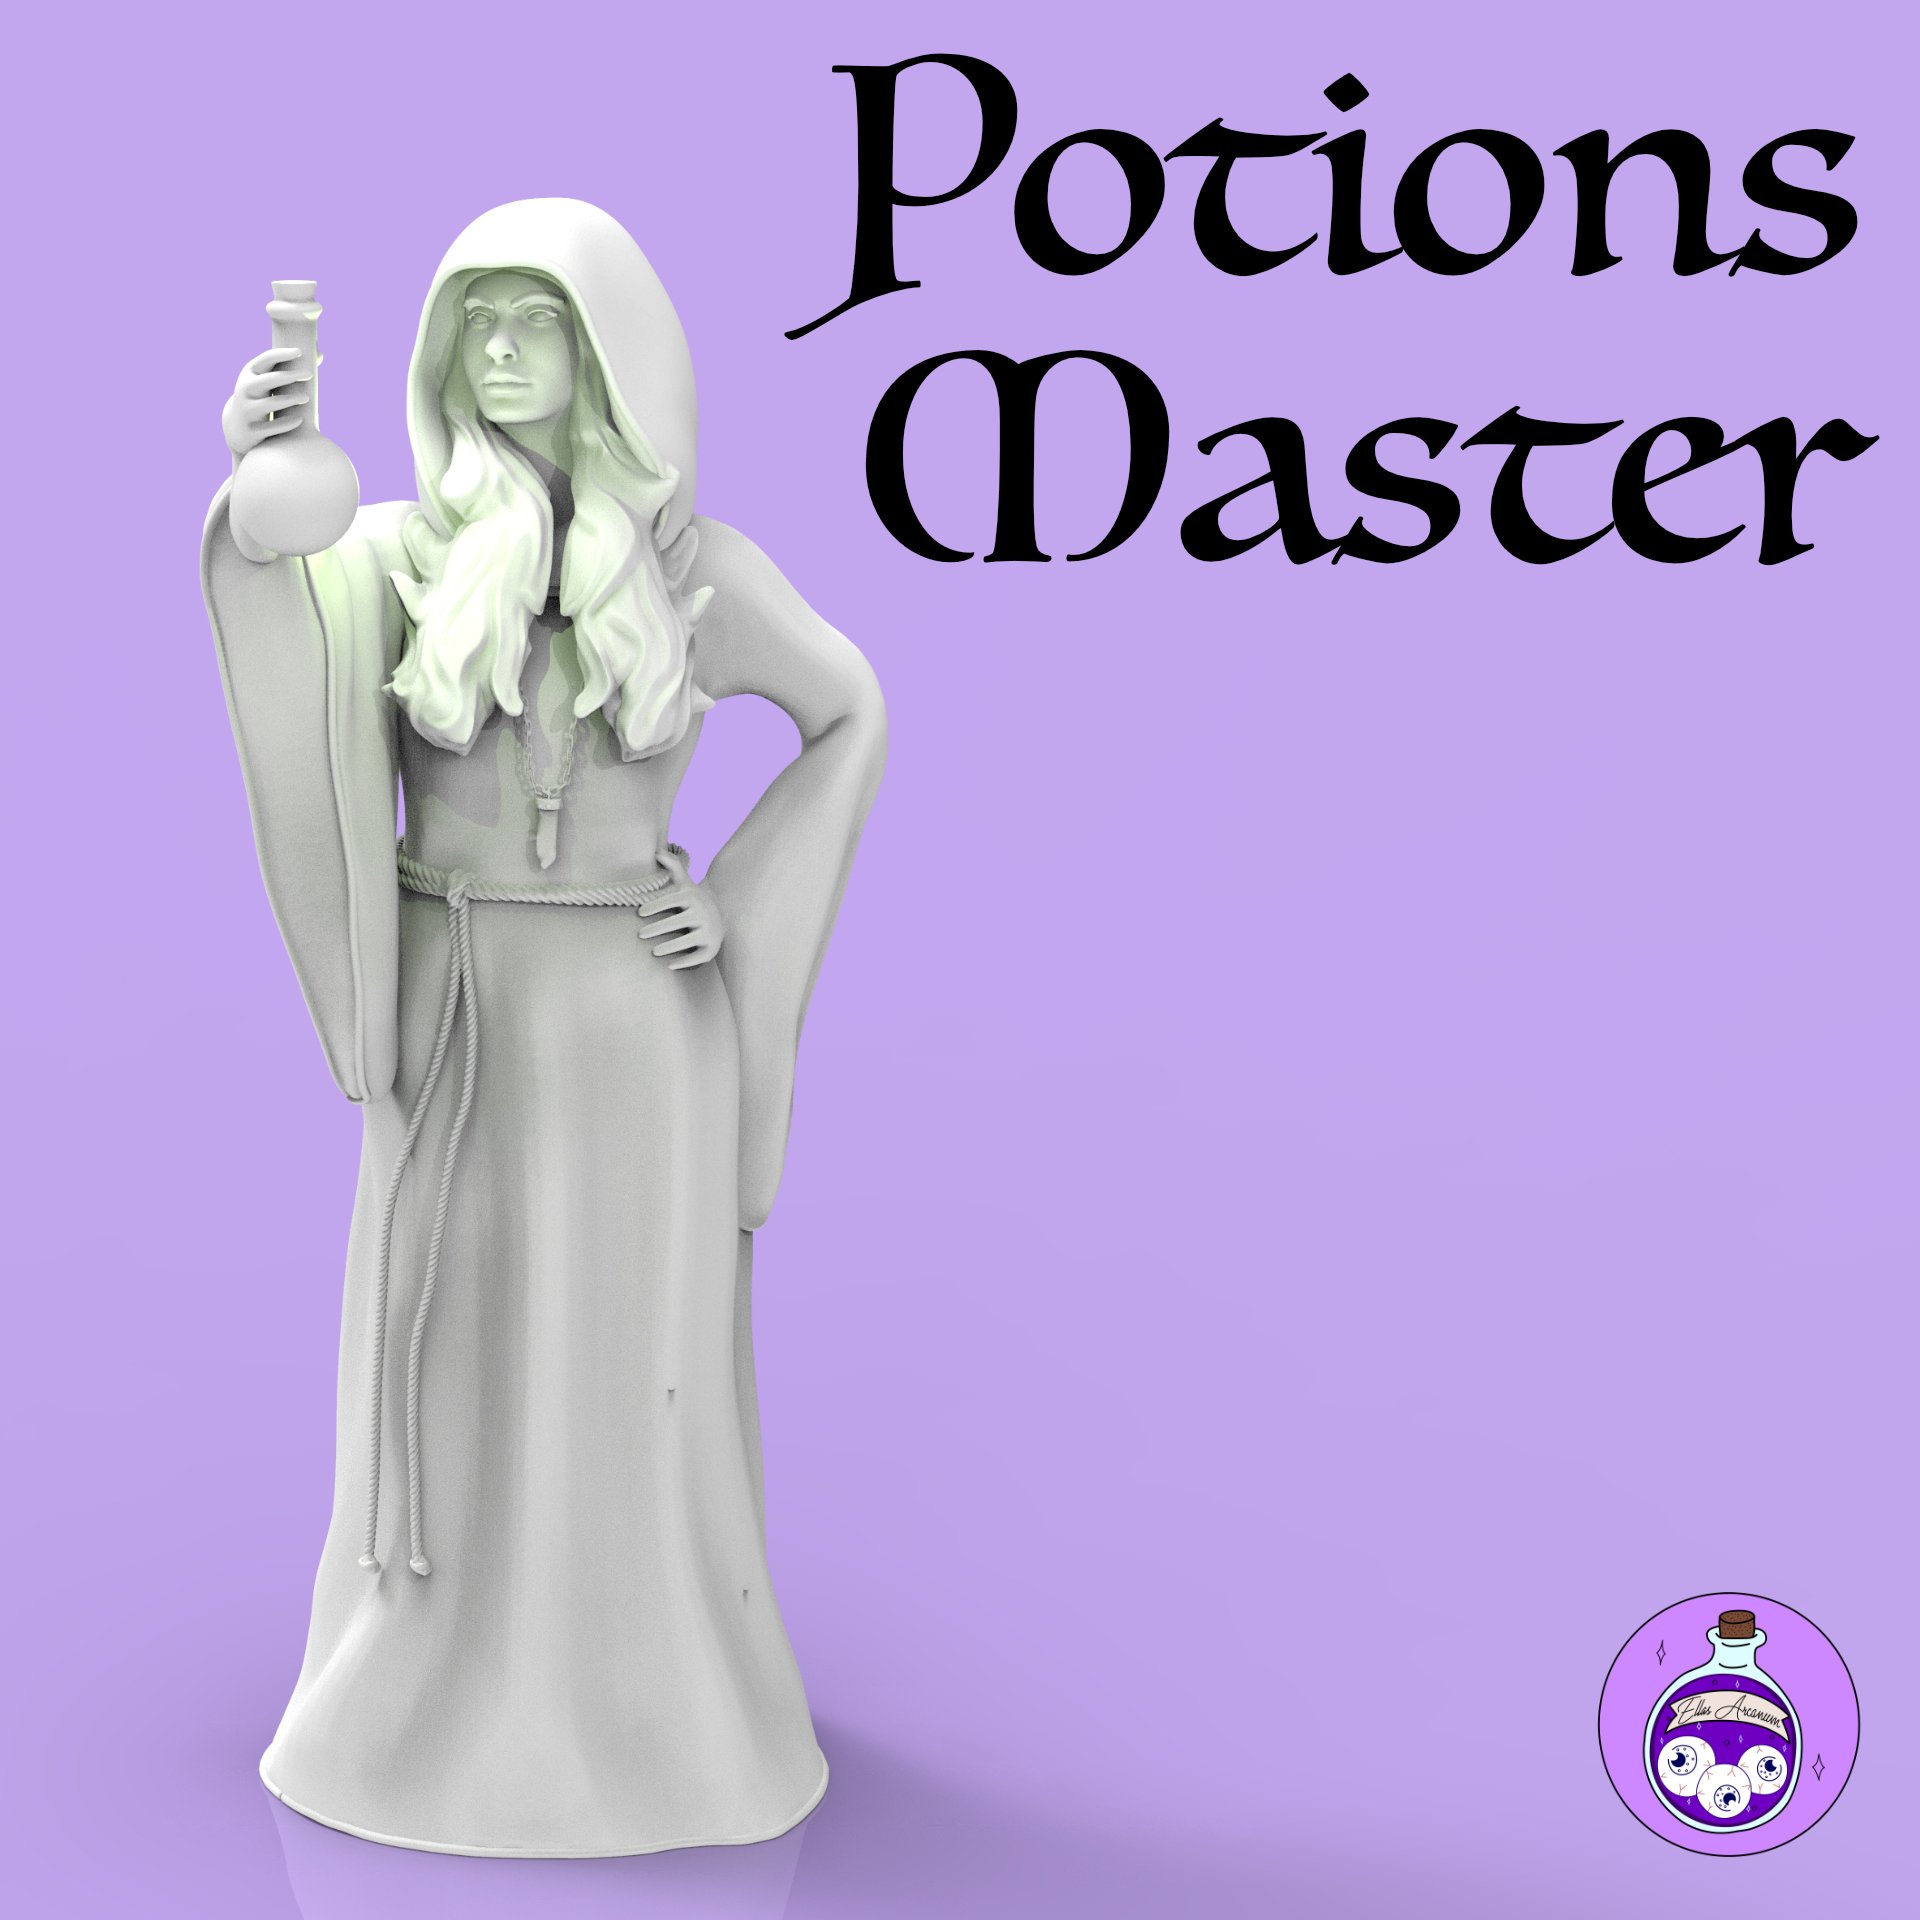 Potions Master.jpg